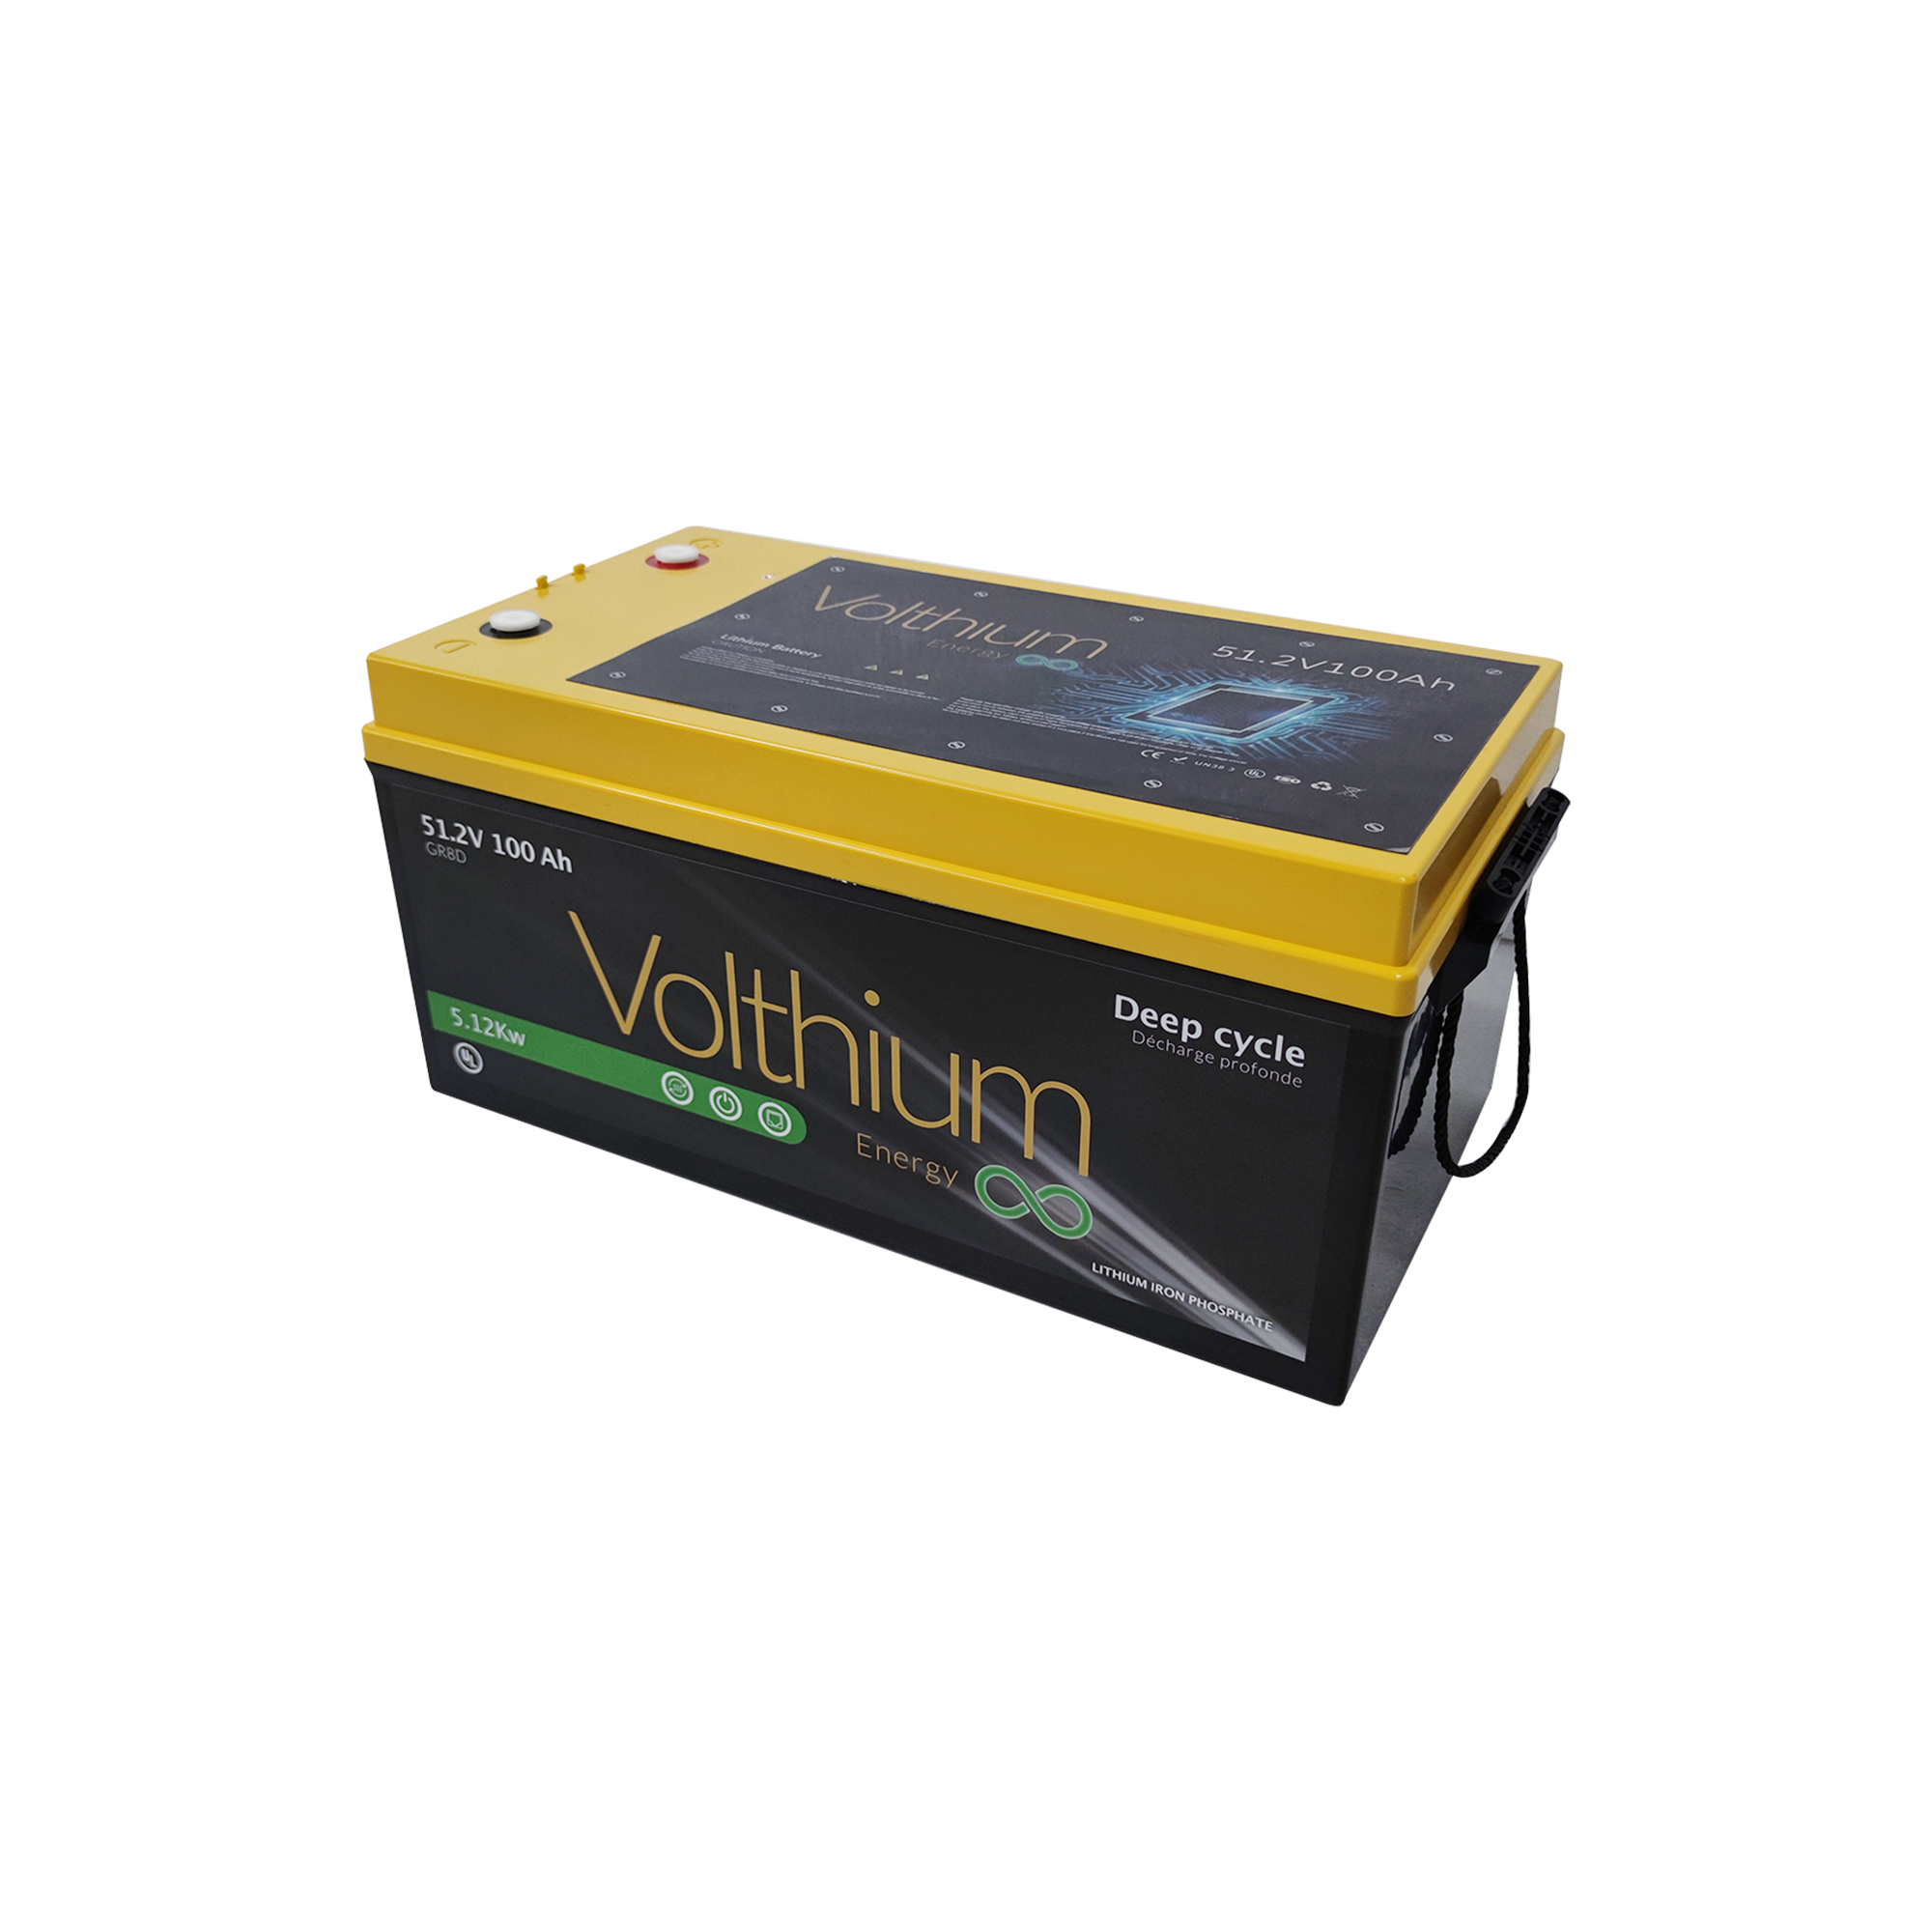 51.2V 100AH BATTERY – Self-heating 8D - Volthium